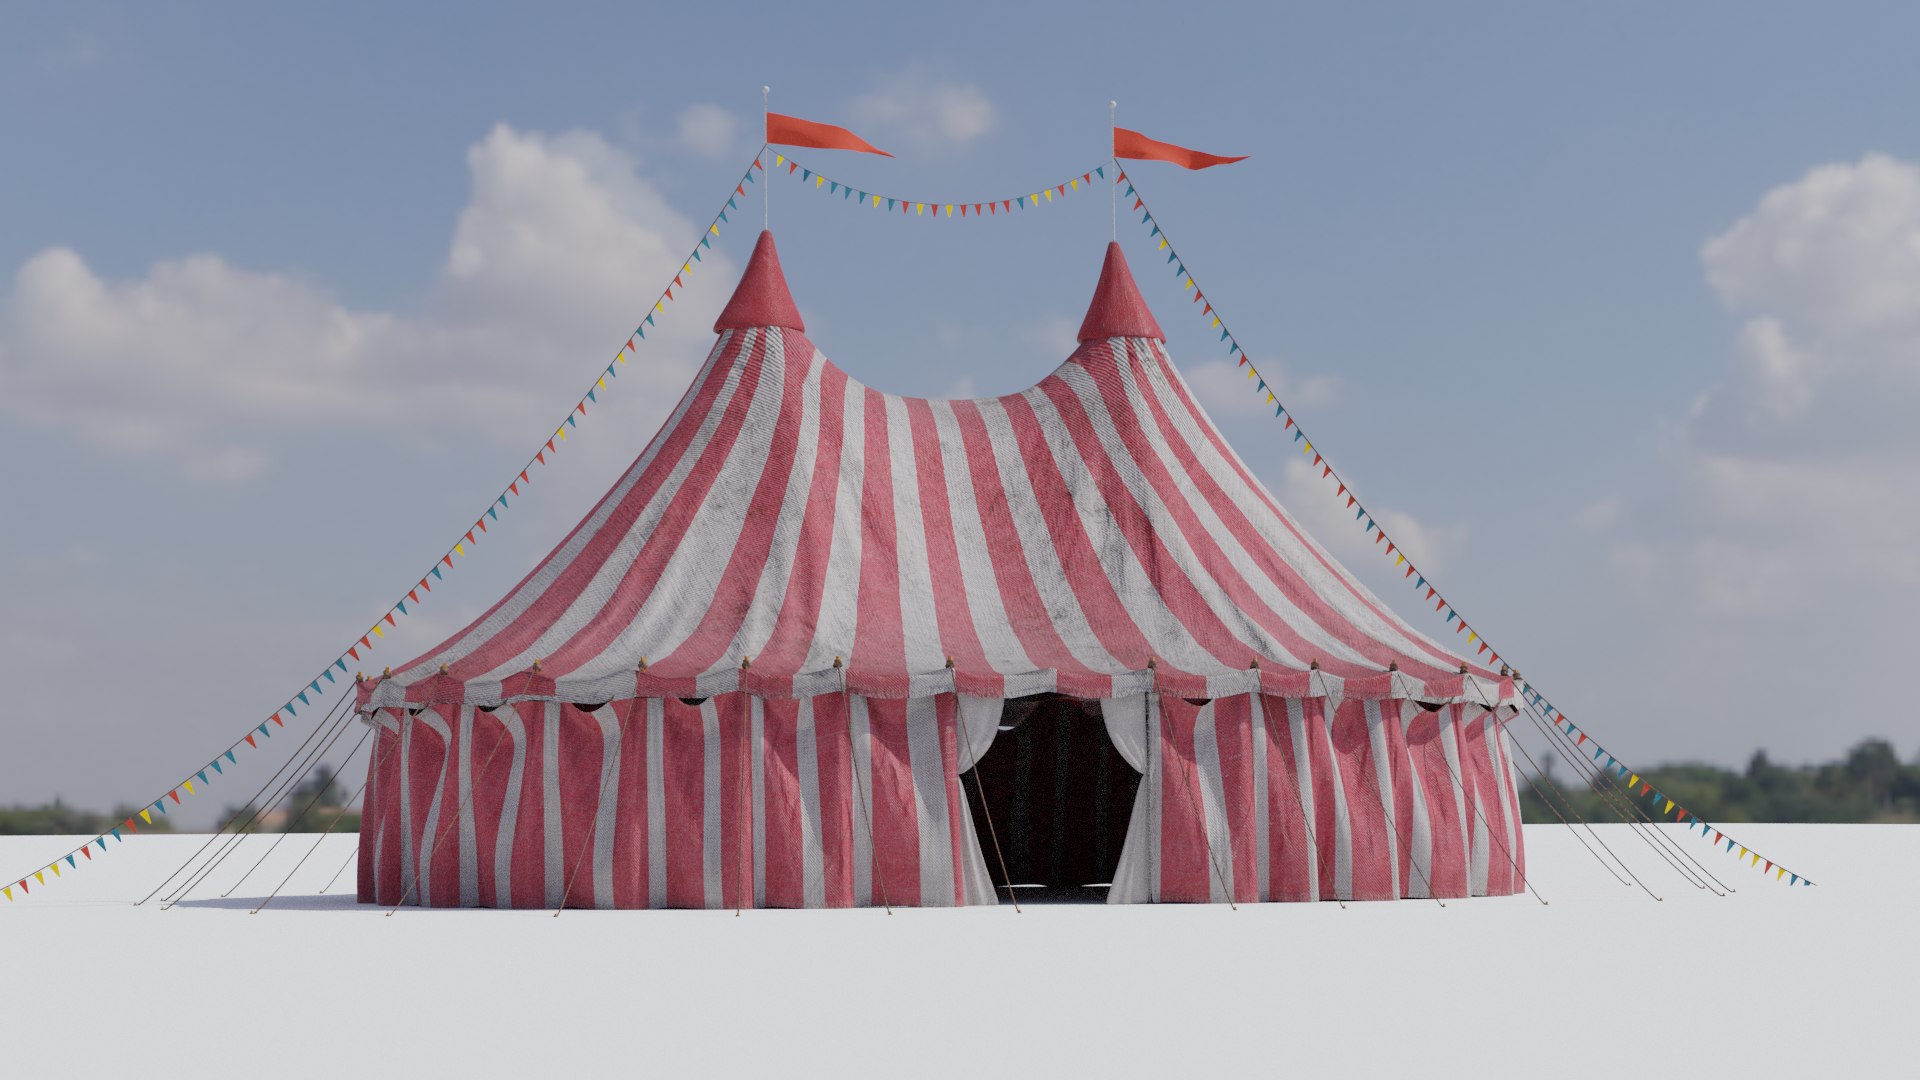 planter Hymne technisch Circus tent 3D model - TurboSquid 1820046